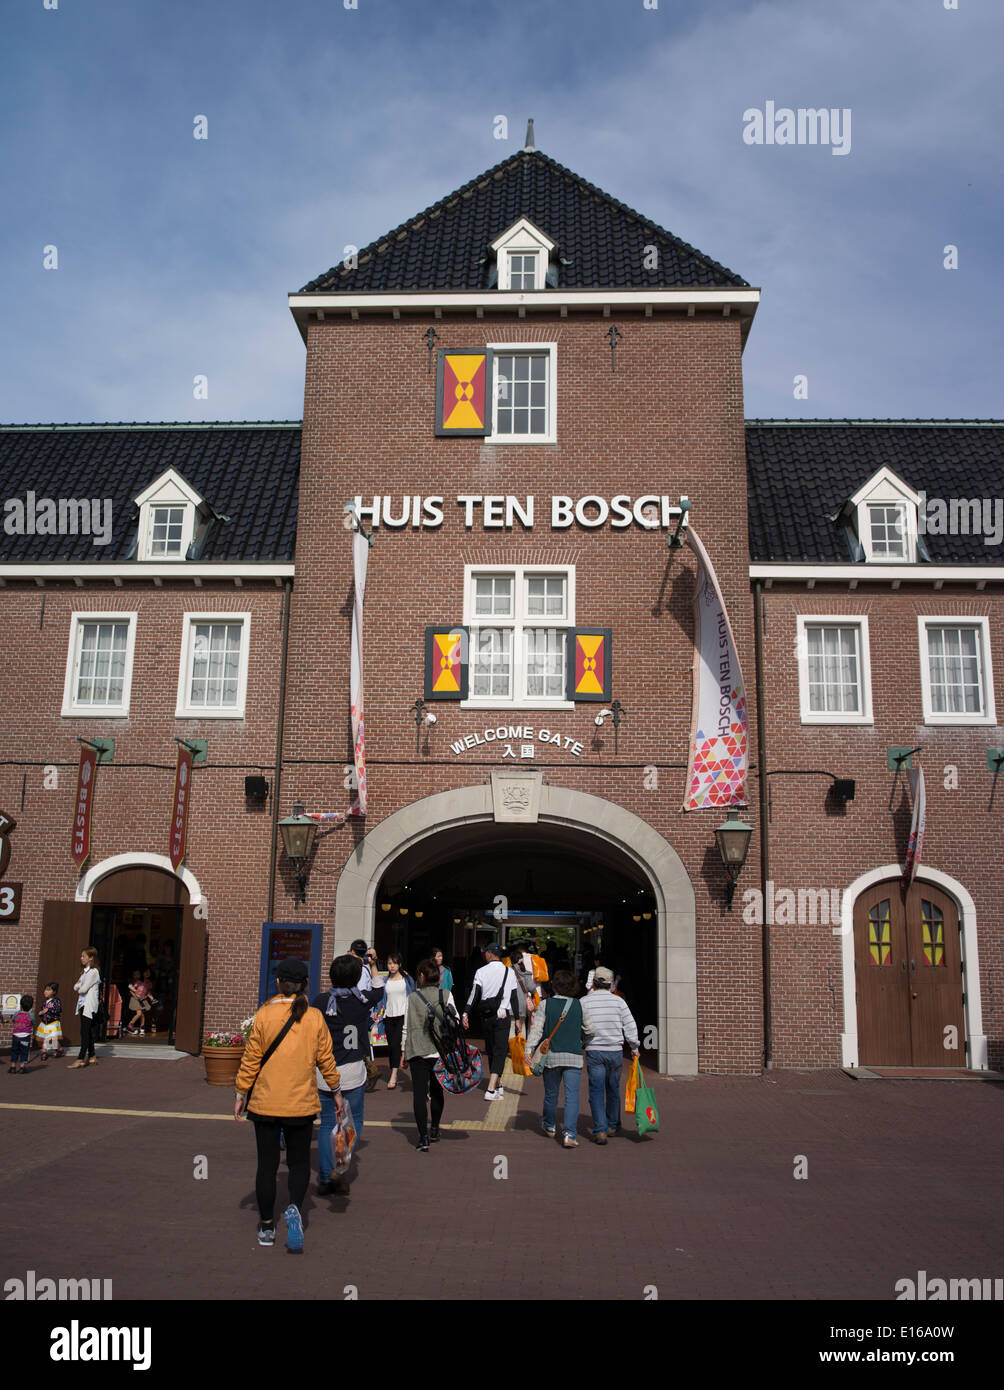 Huis Ten Bosch, a theme park in Sasebo, Nagasaki, Japan. Recreates Netherlands and dutch buildings. Stock Photo